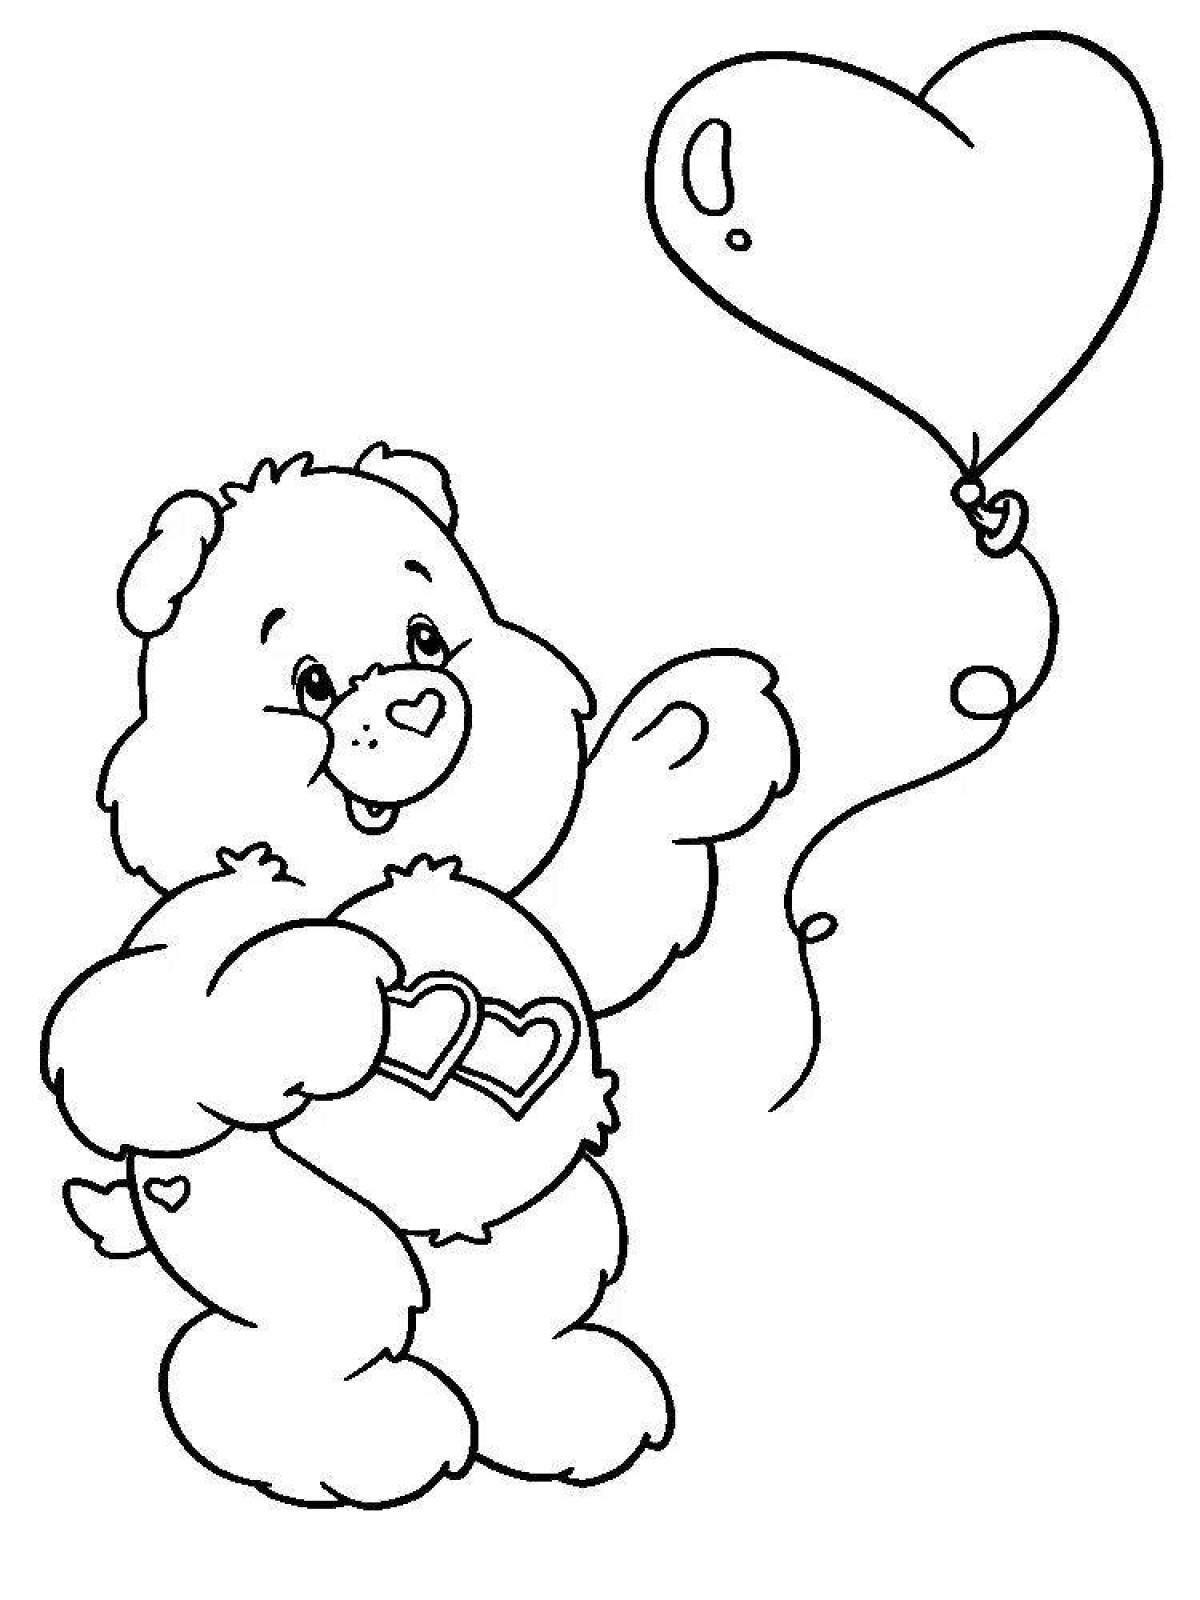 Magic bear with balloons